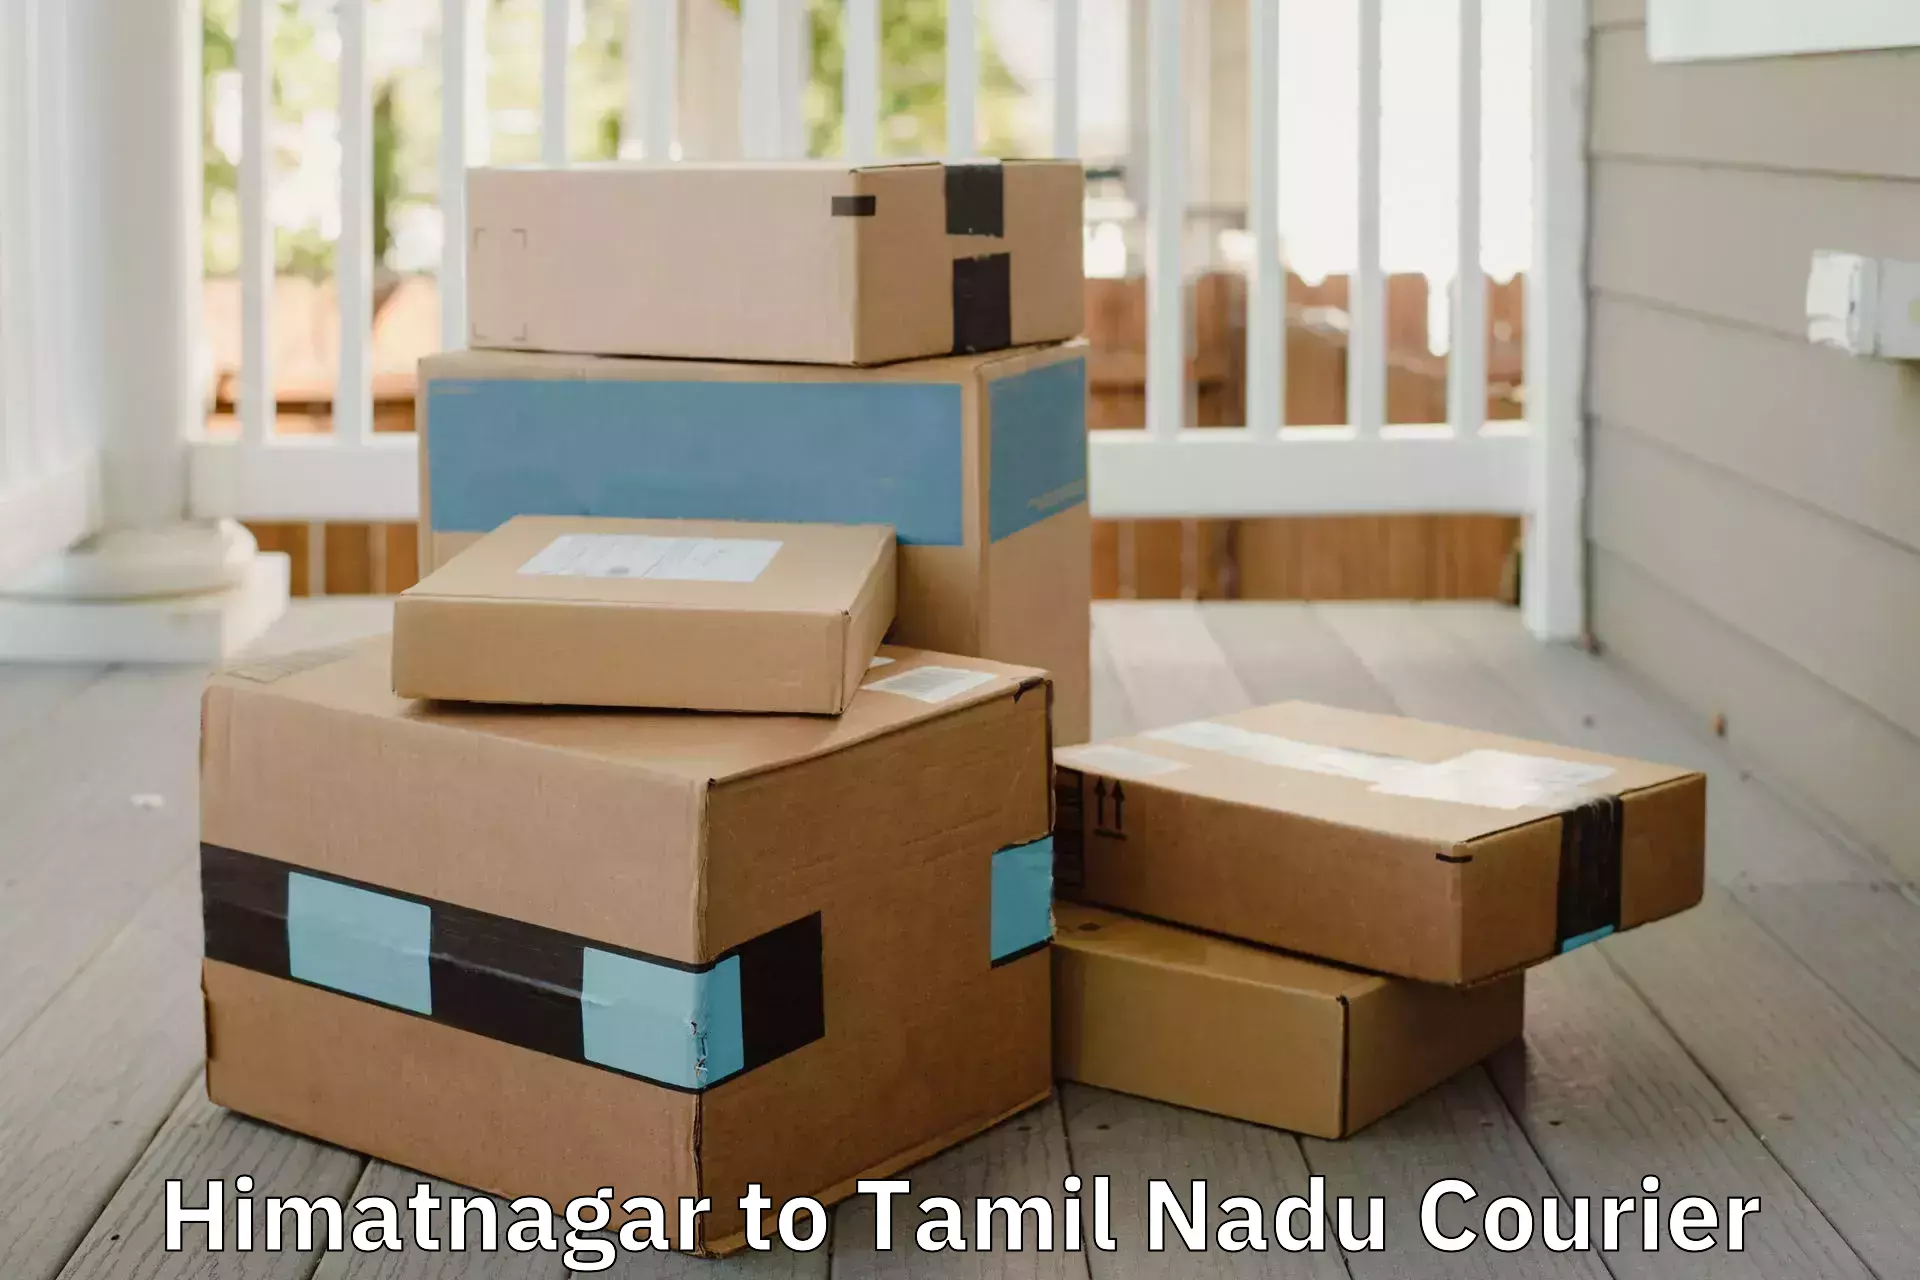 Trusted relocation experts Himatnagar to Tamil Nadu